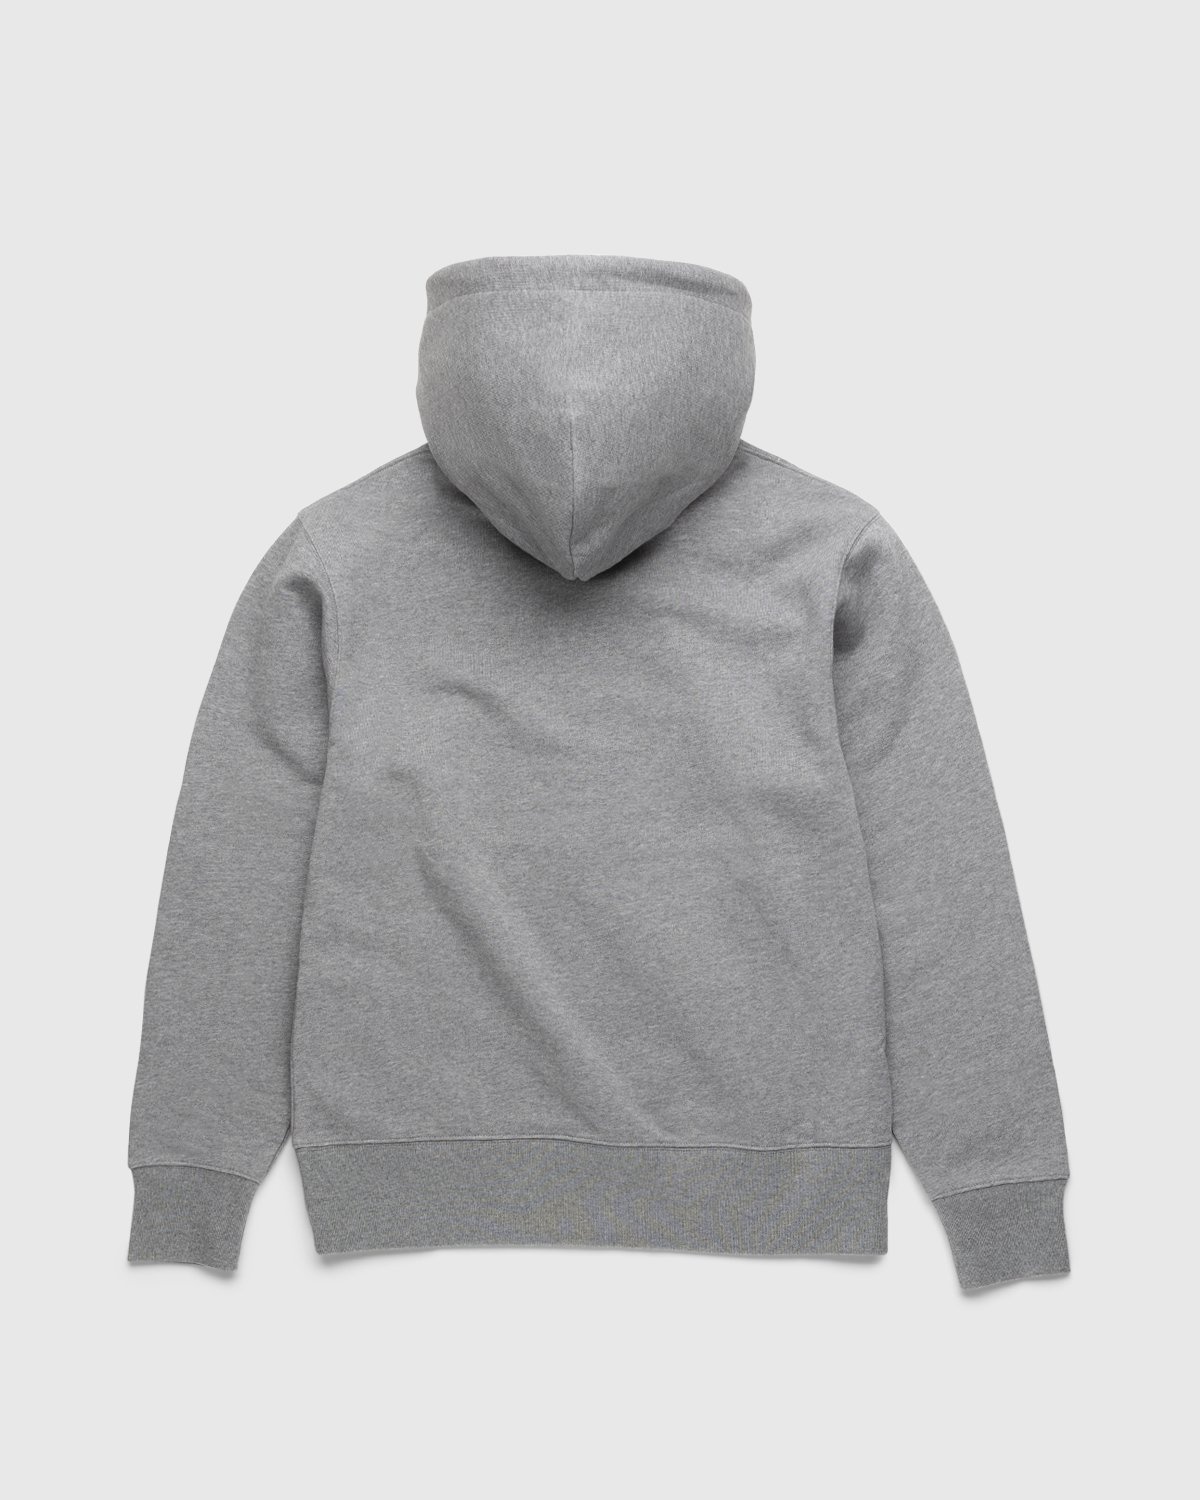 Acne Studios – Organic Cotton Hooded Sweatshirt Light Grey Melange - Sweats - Grey - Image 2